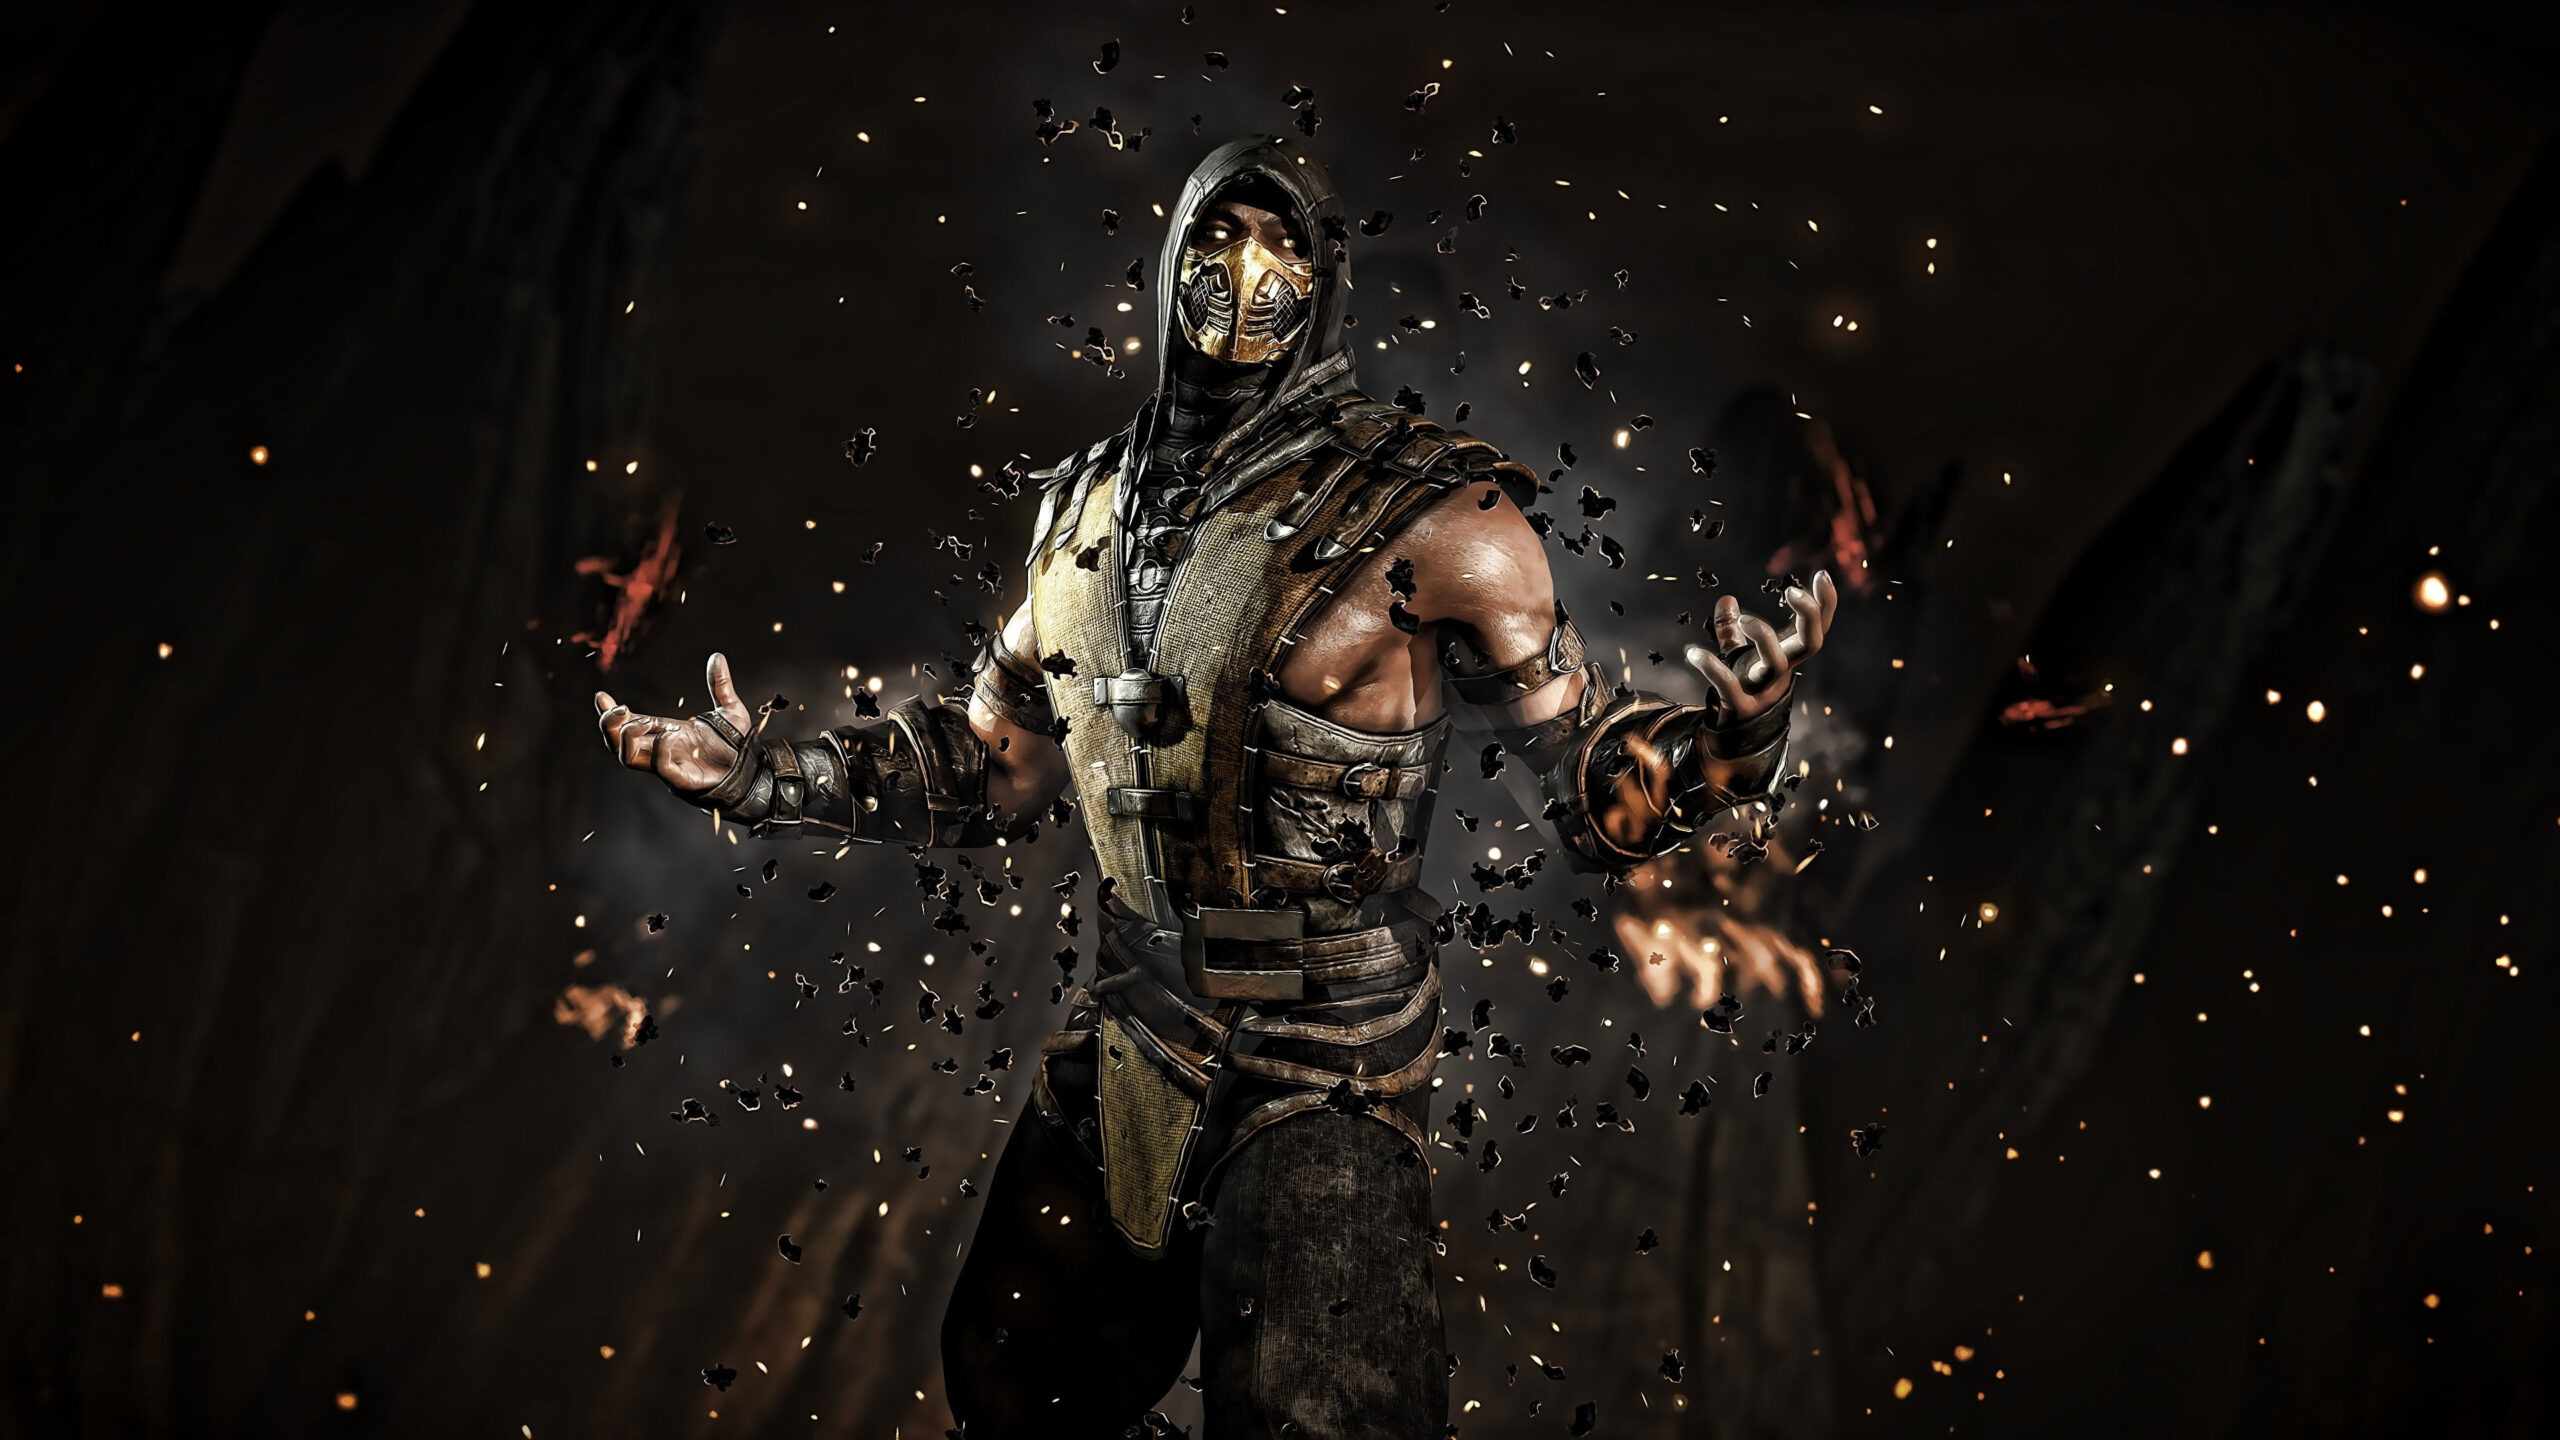 Wallpaper Mortal Kombat Scorpion, Video Games